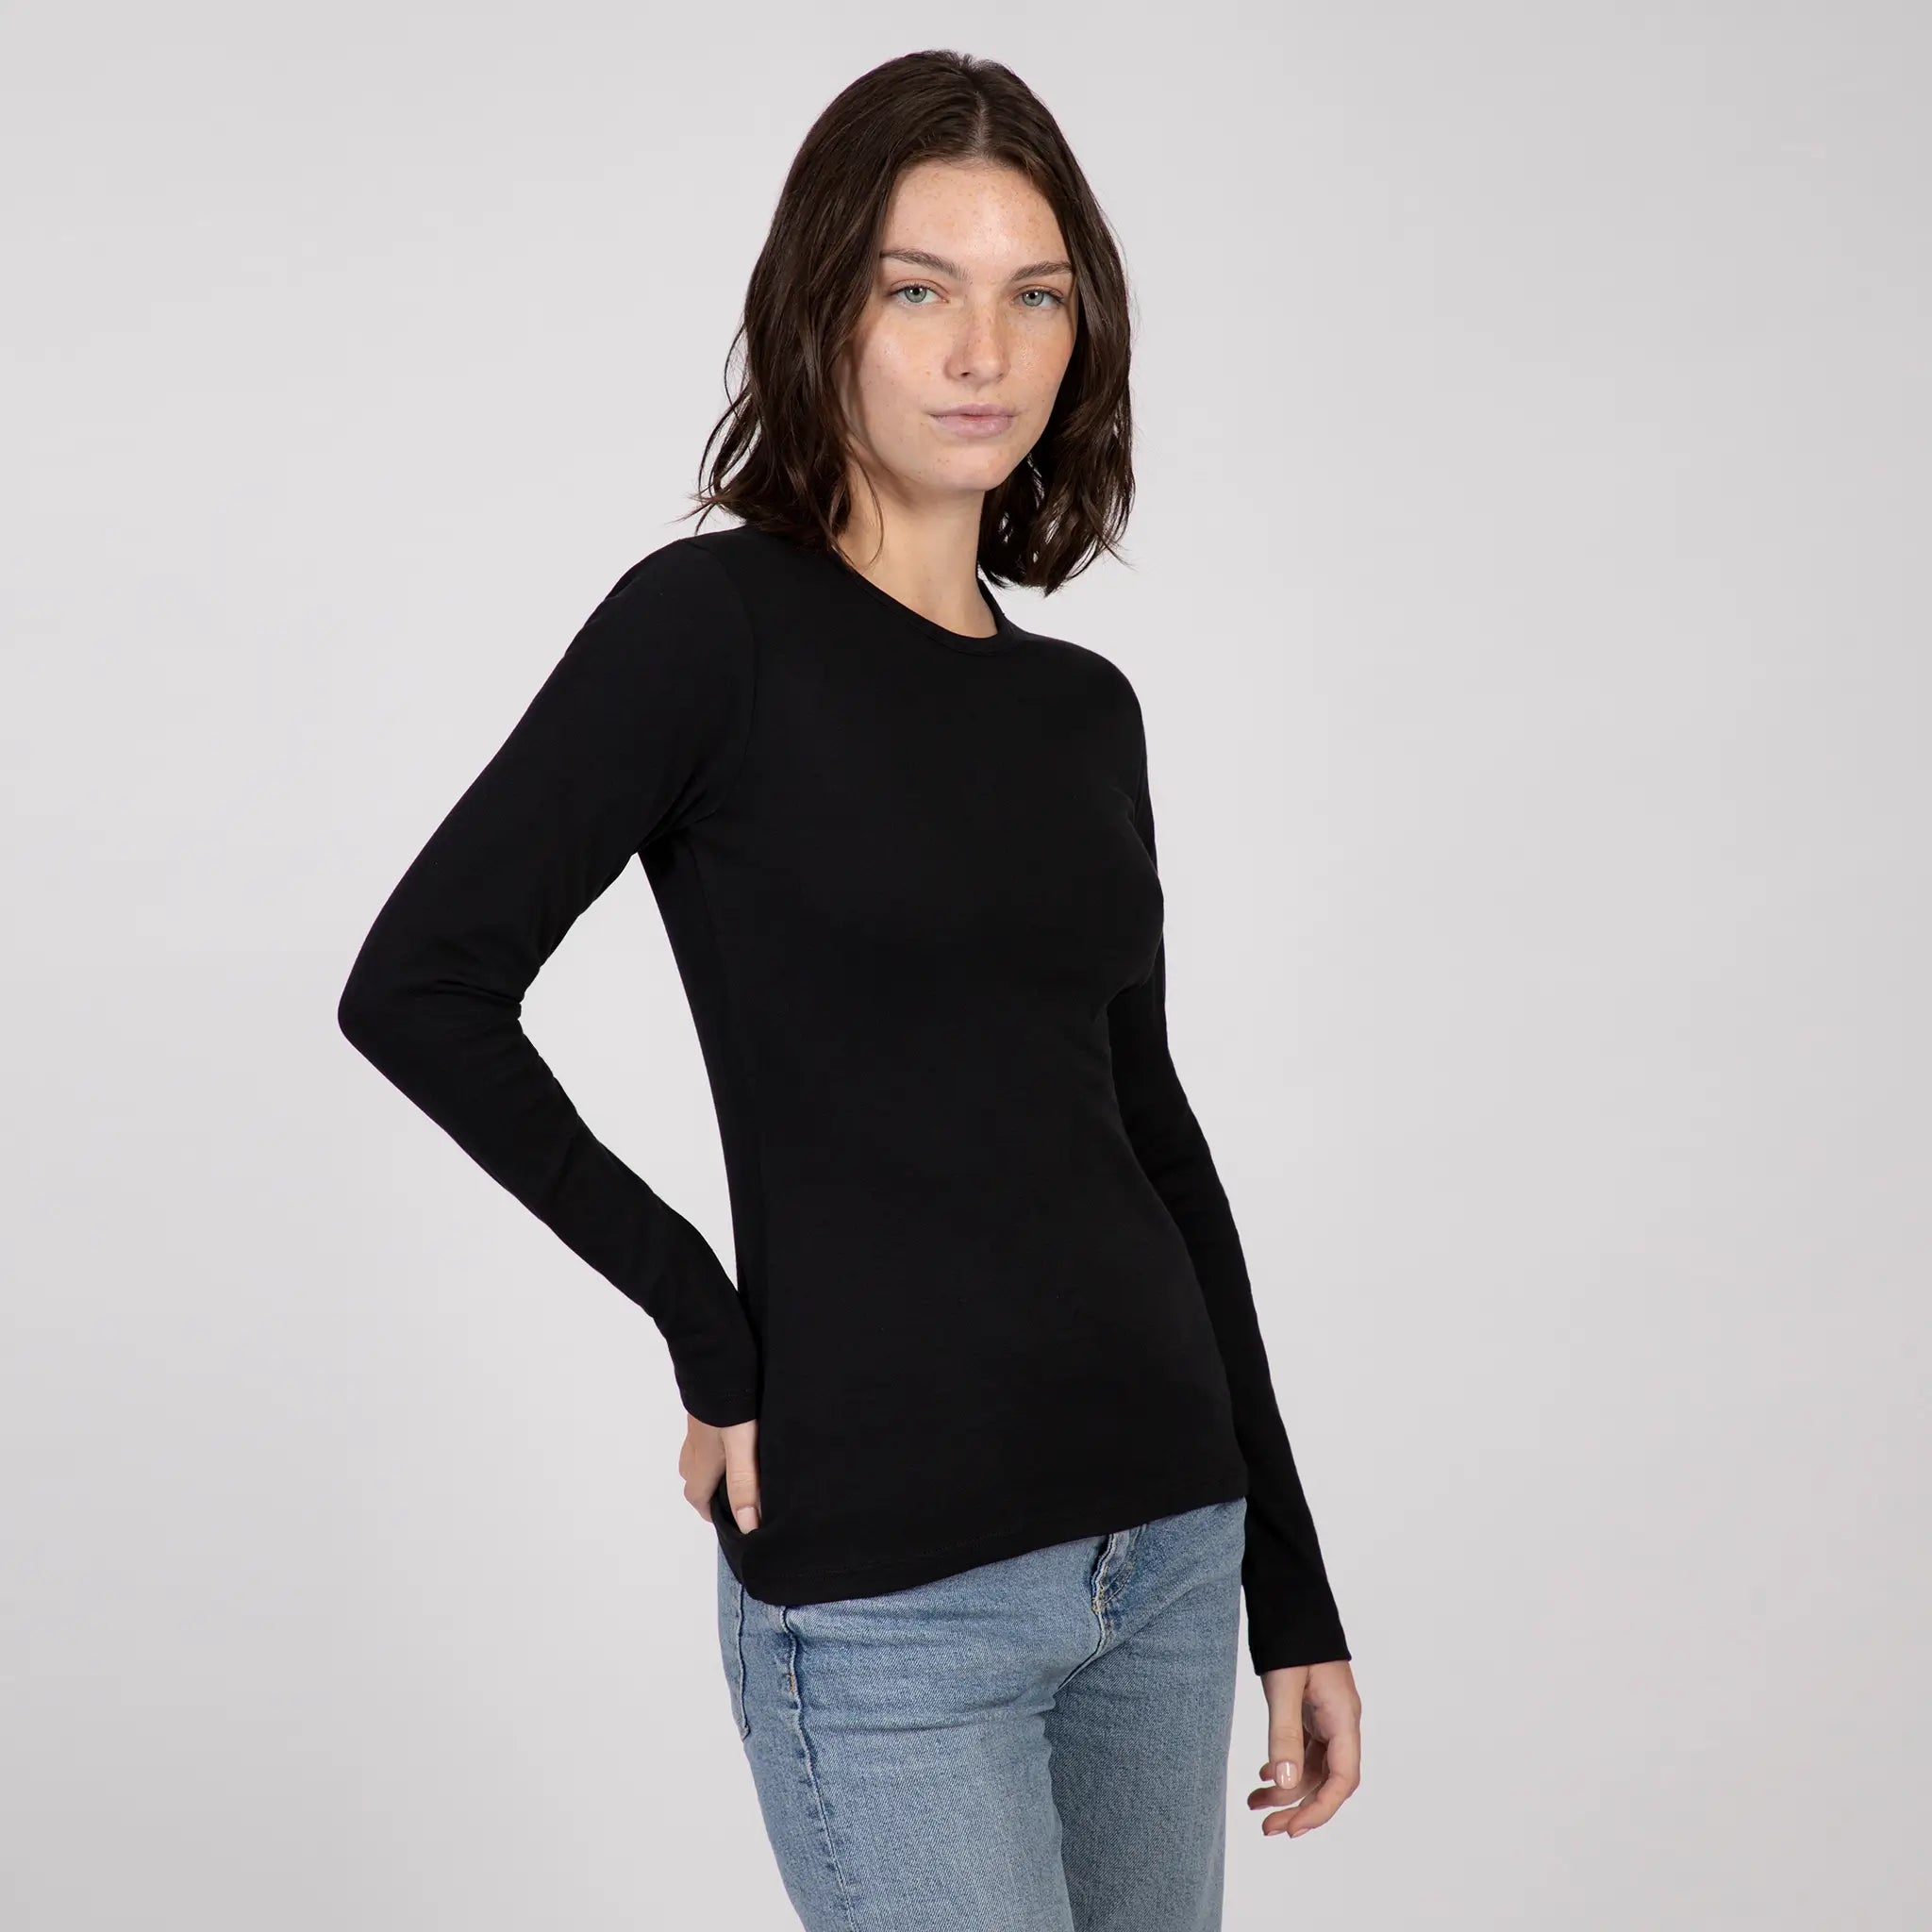 womens single origin tshirt long sleeve color black